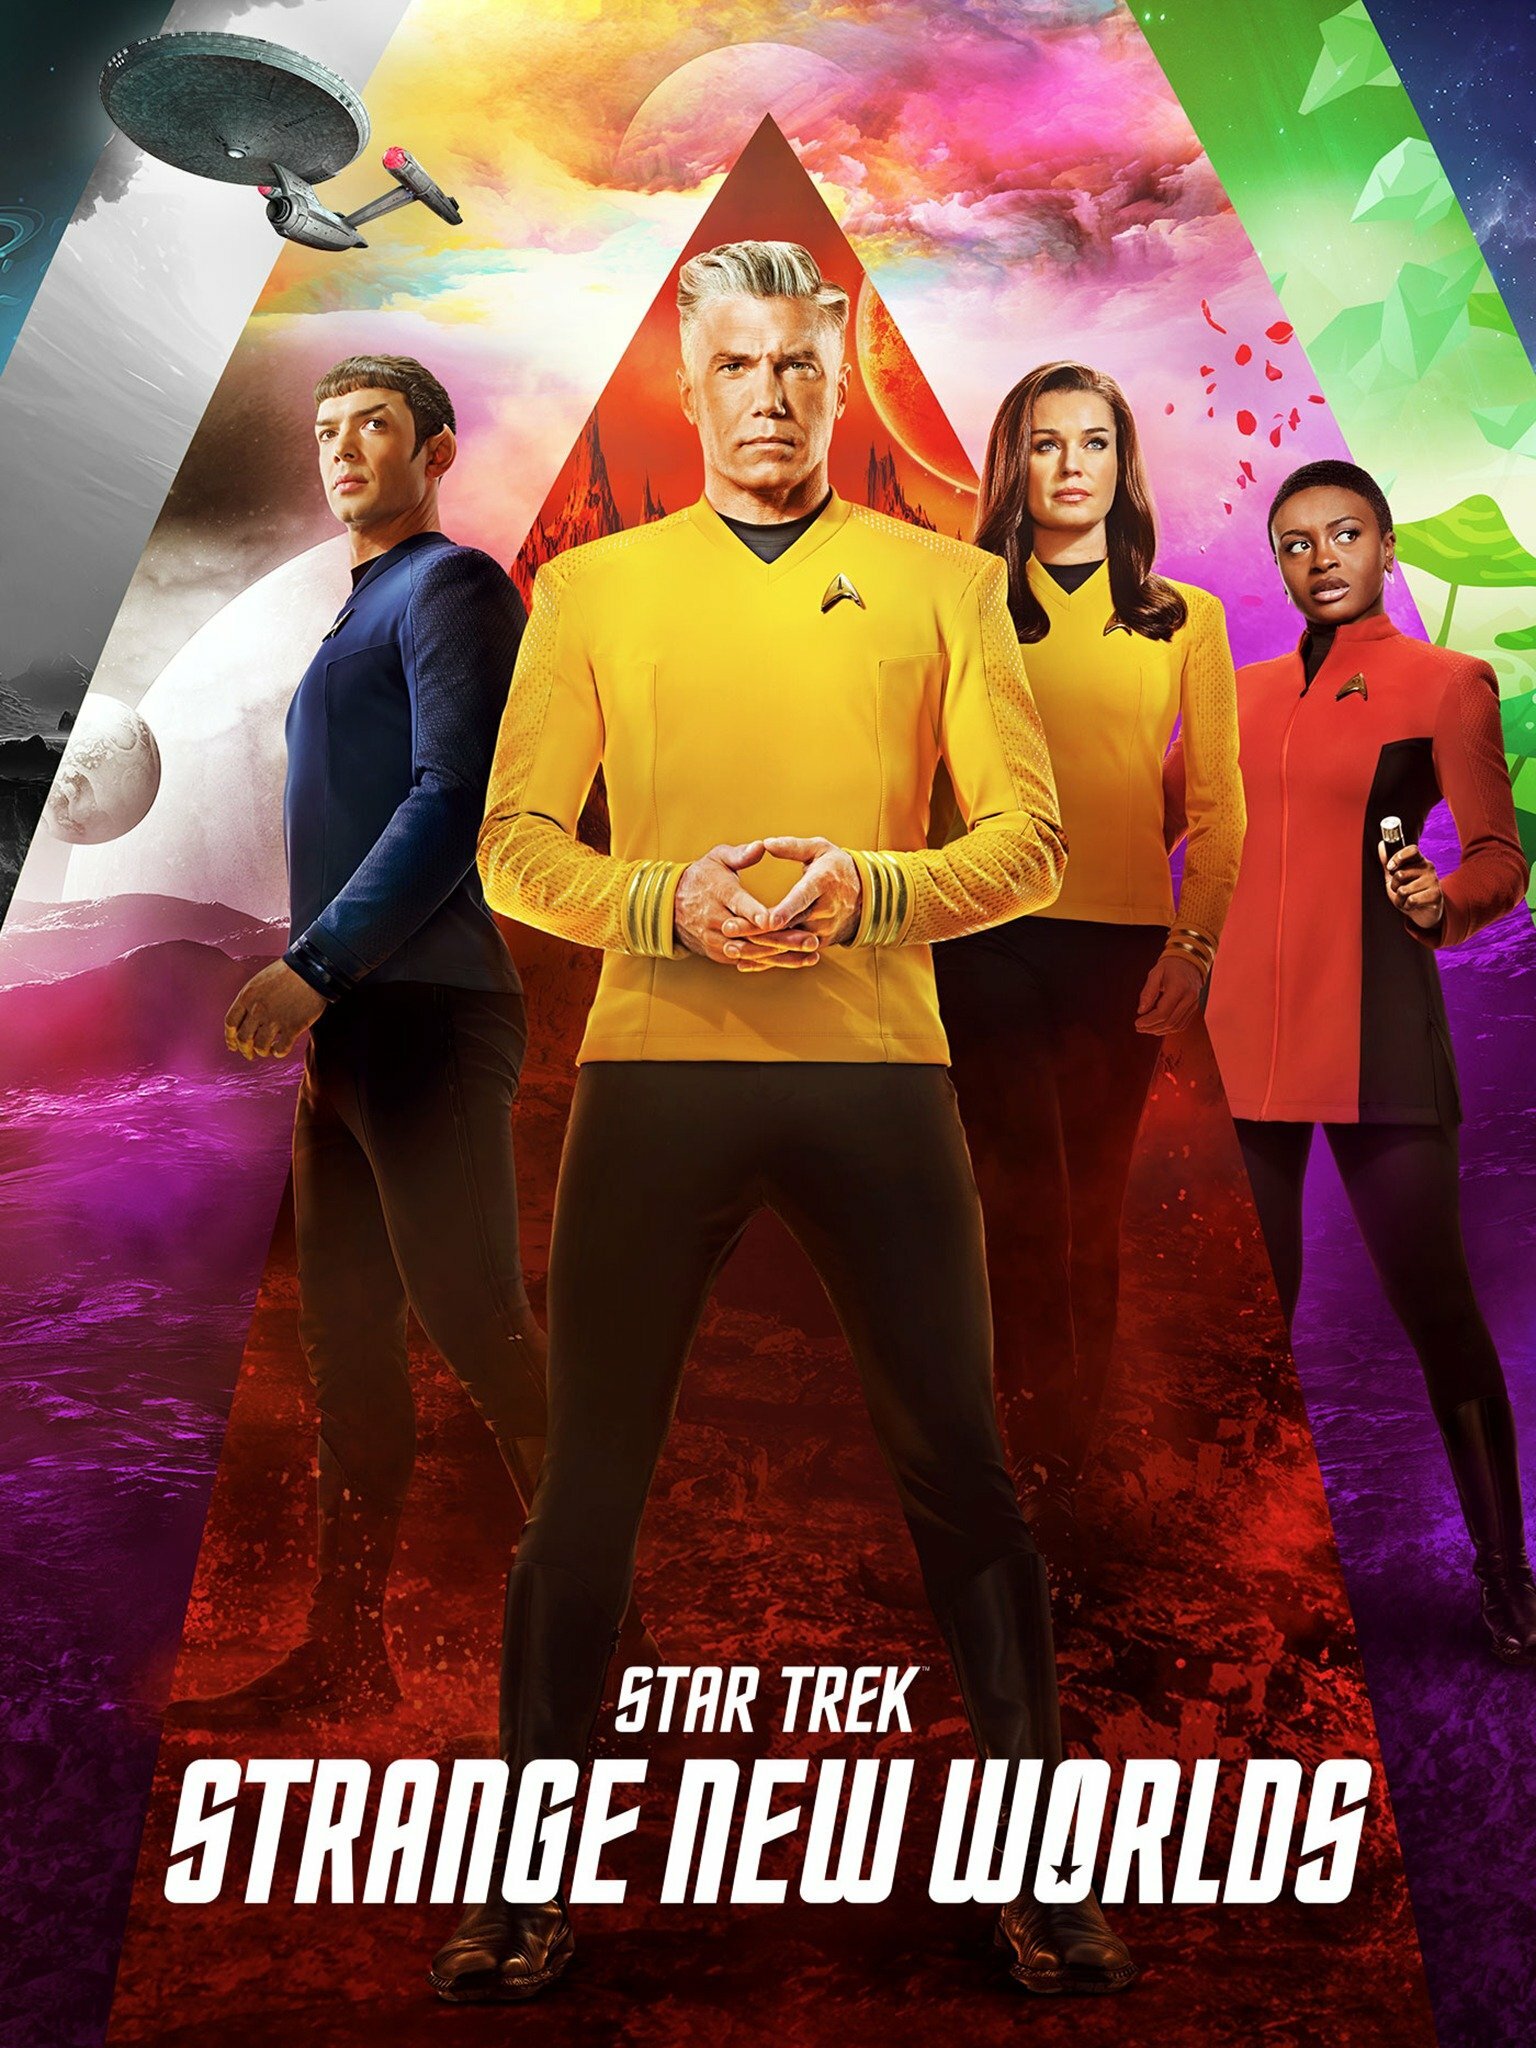 Star Trek: Strange New Worlds ne zaman